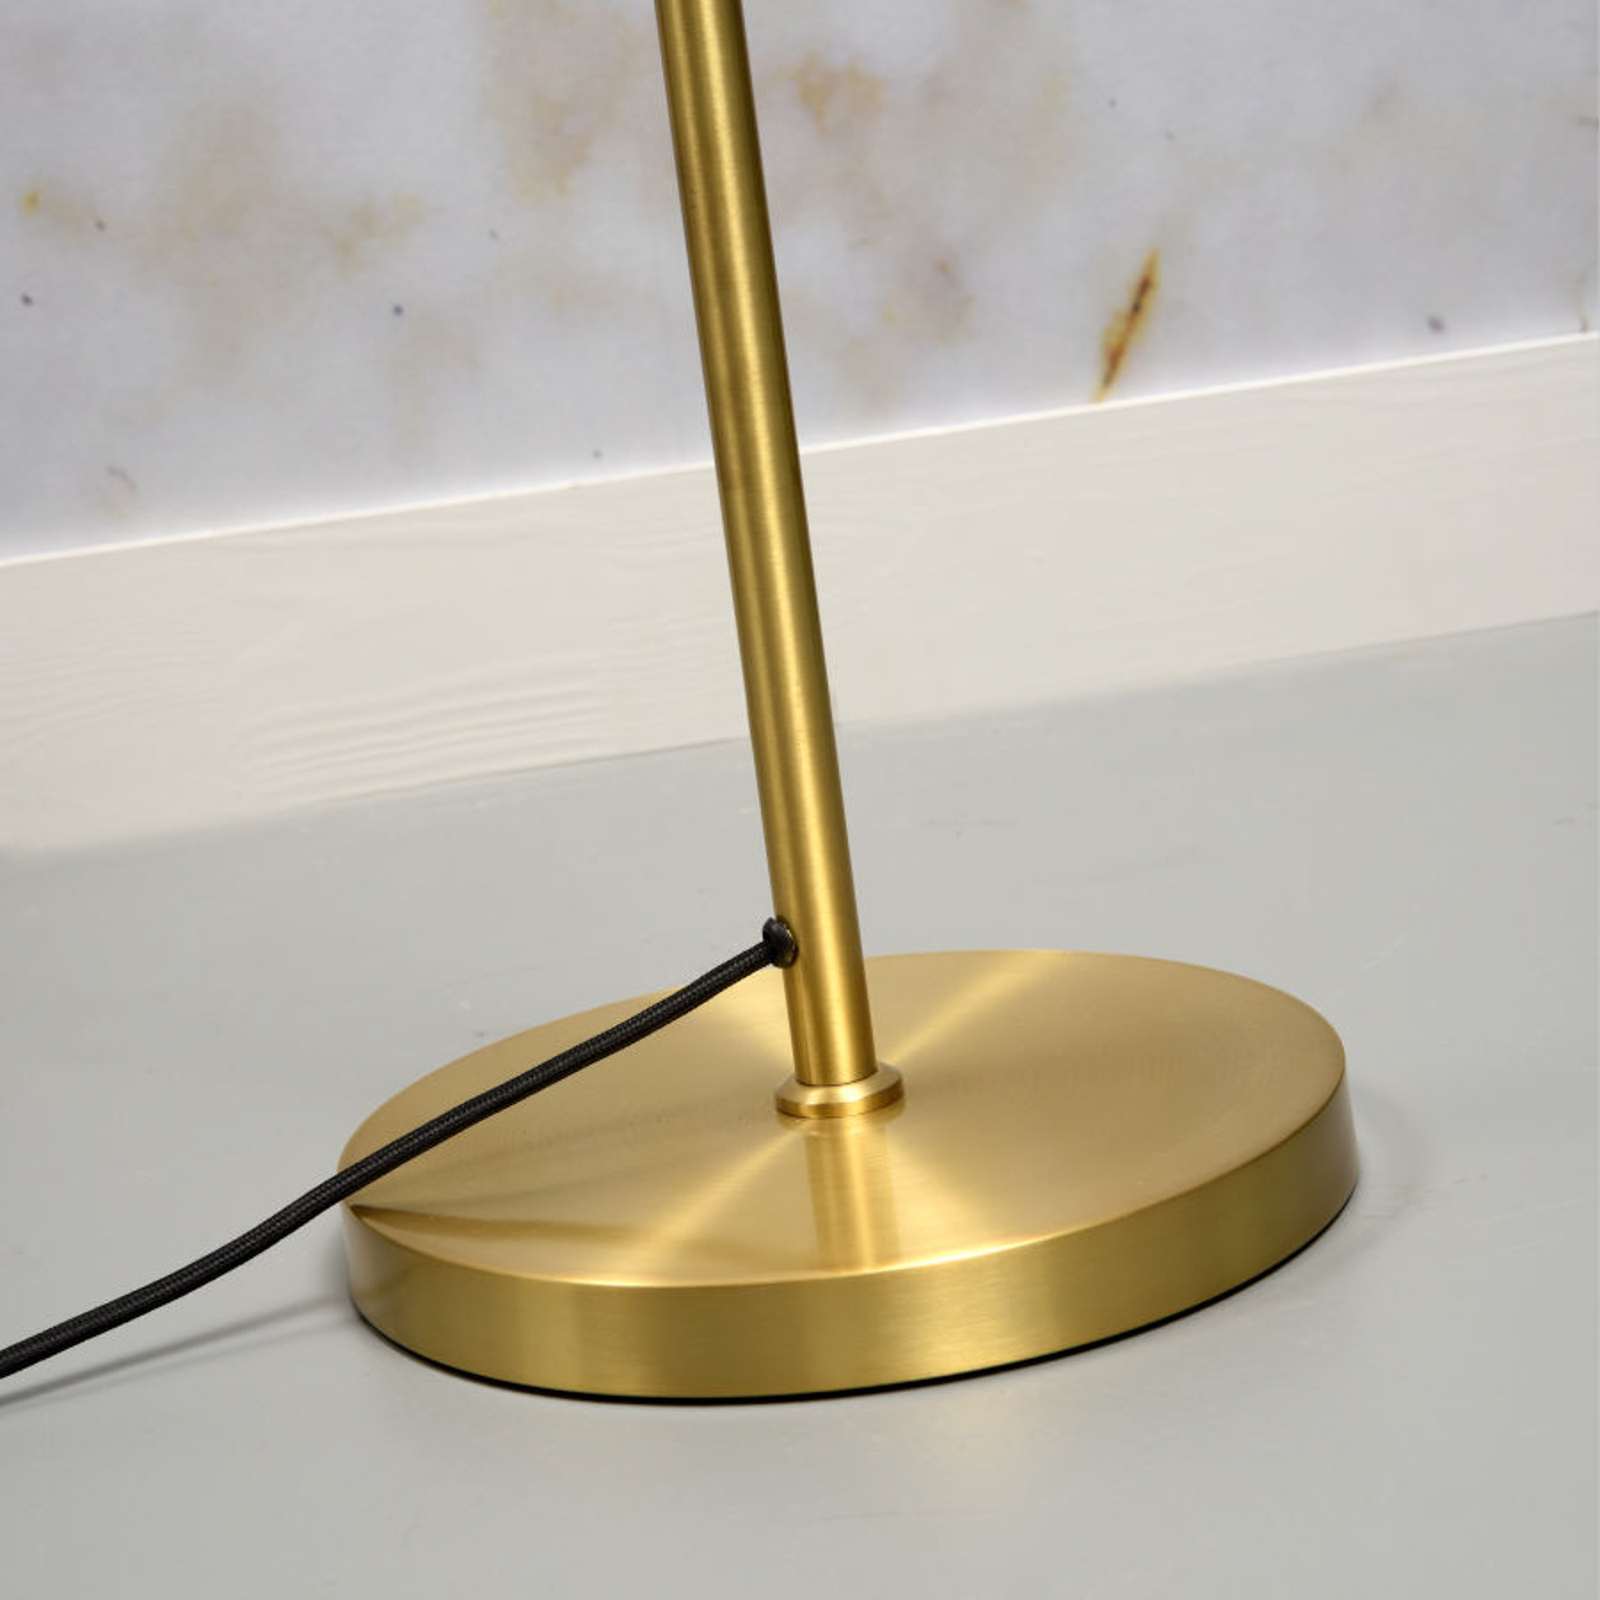 It’s about RoMi Lyon floor lamp, gold